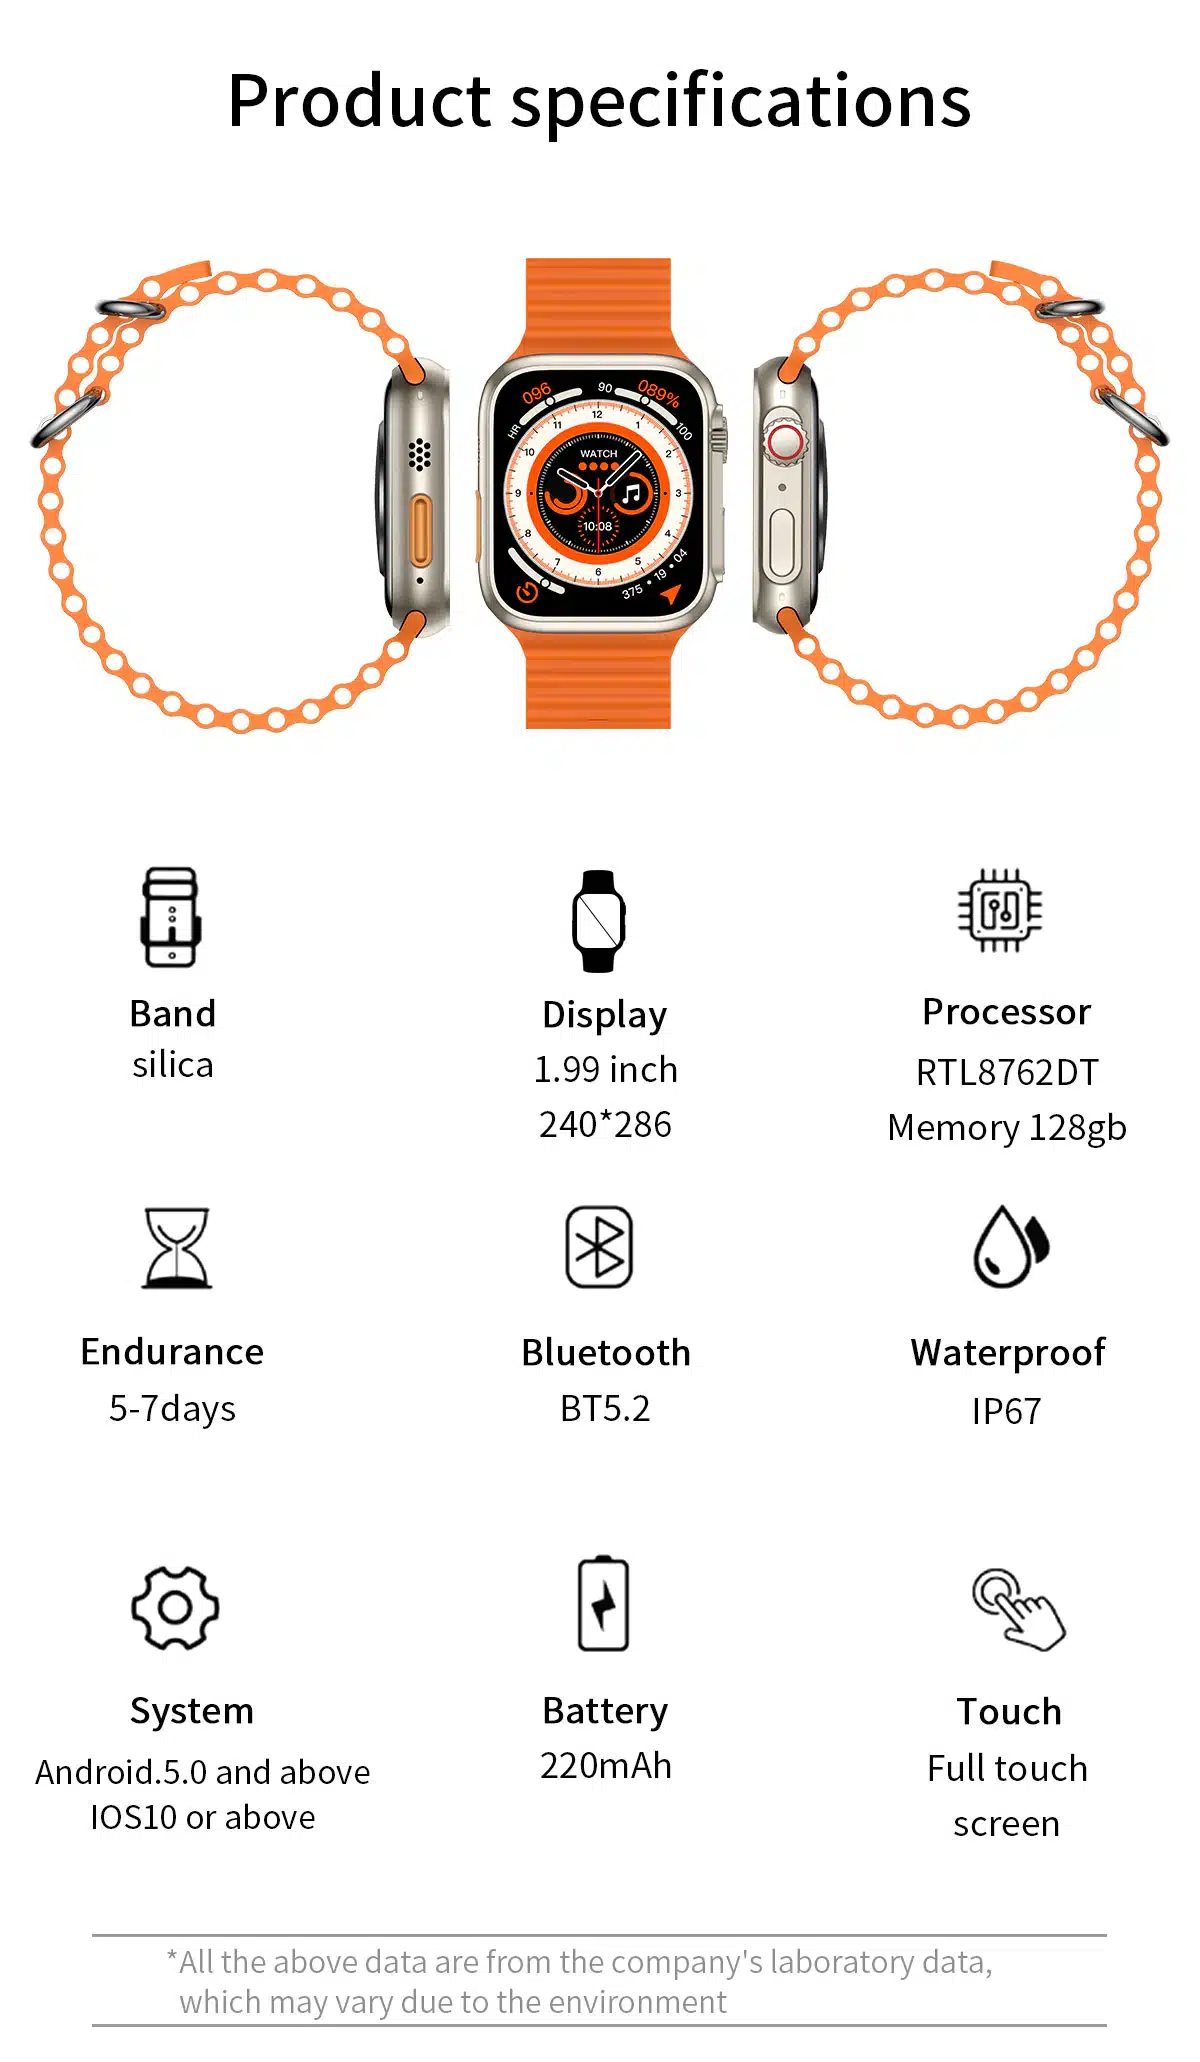 Z59 -ultra- bluetooth- call- smartwatch